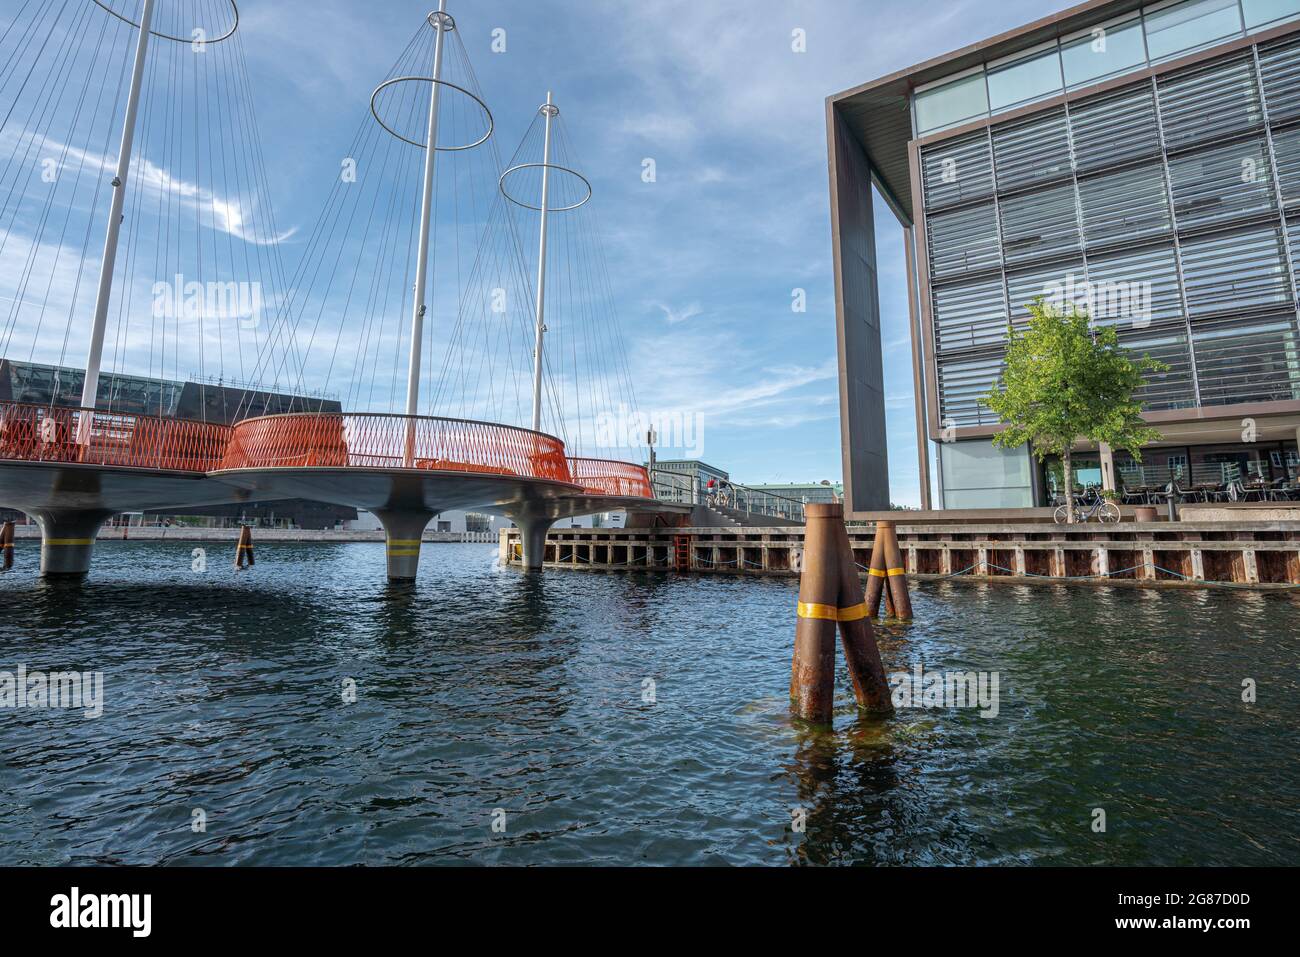 Circle Bridge - pedestrian bridge in Christianshavn designed by Olafur Eliasson, 2015 - Copenhagen, Denmark Stock Photo